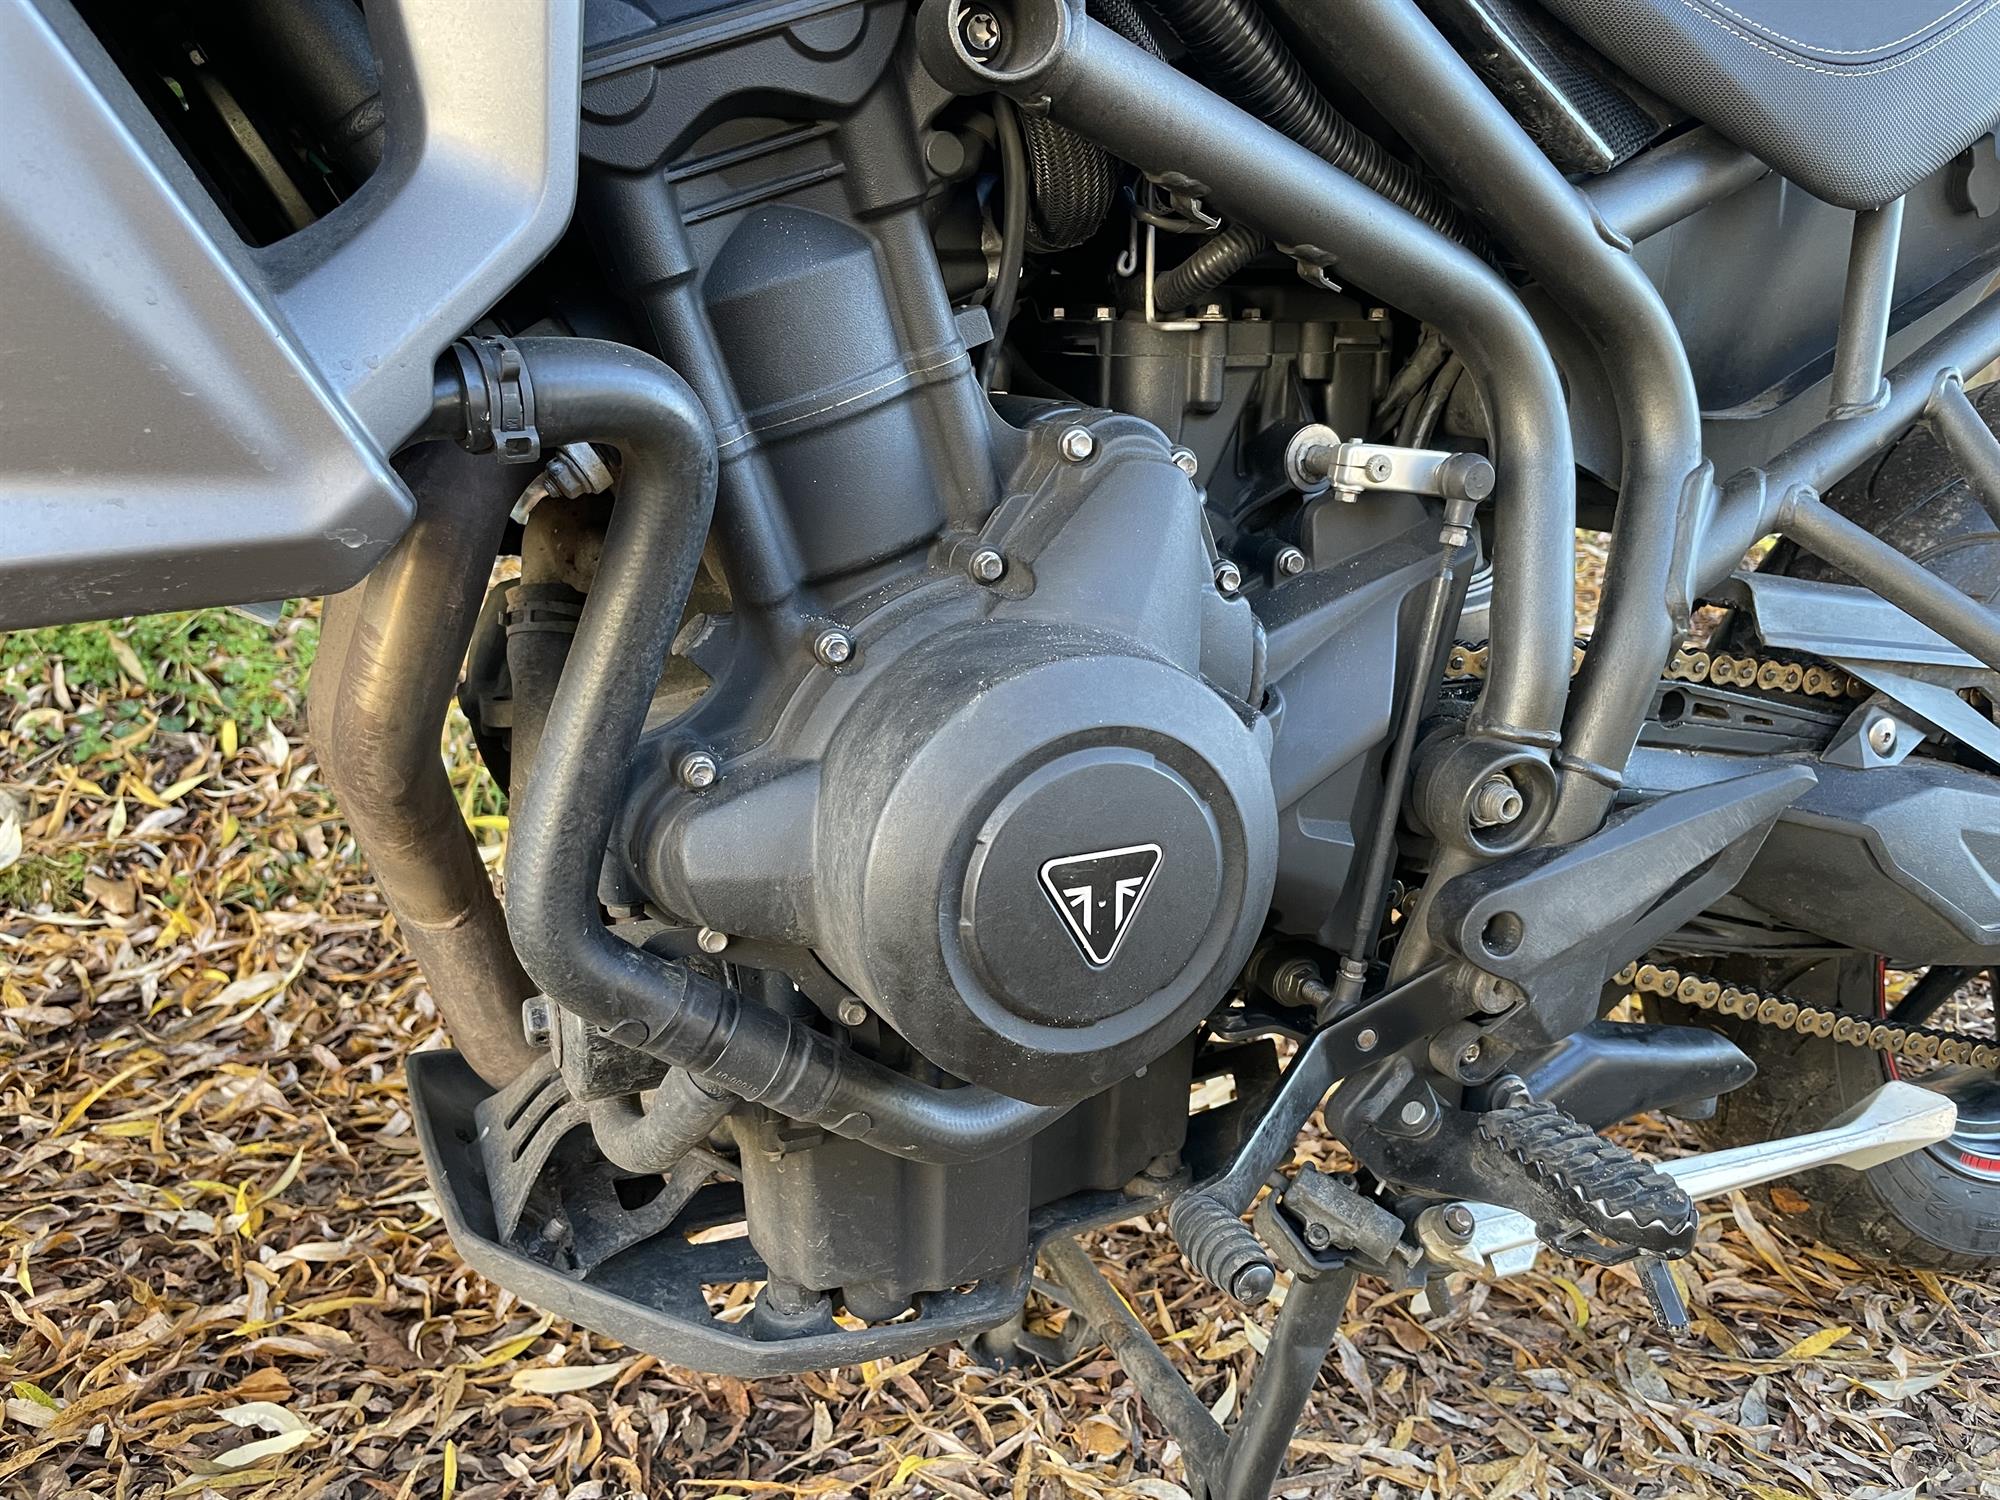 2015 Triumph Tiger 800 XRT 800cc - Image 6 of 10